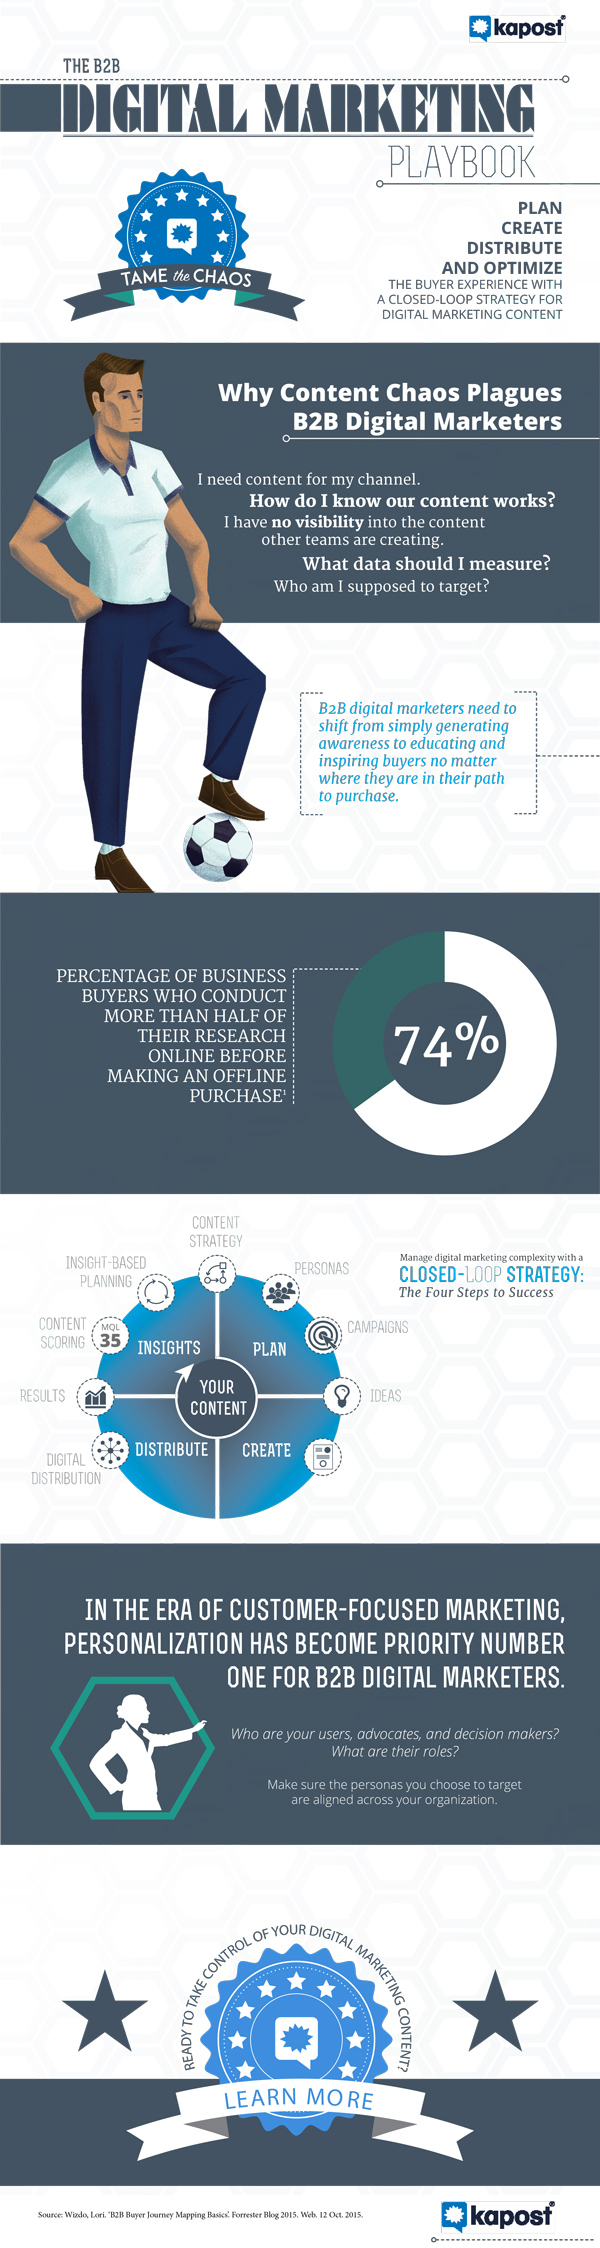 B2B_Digital_Marketing_Playbook_infographic_Web